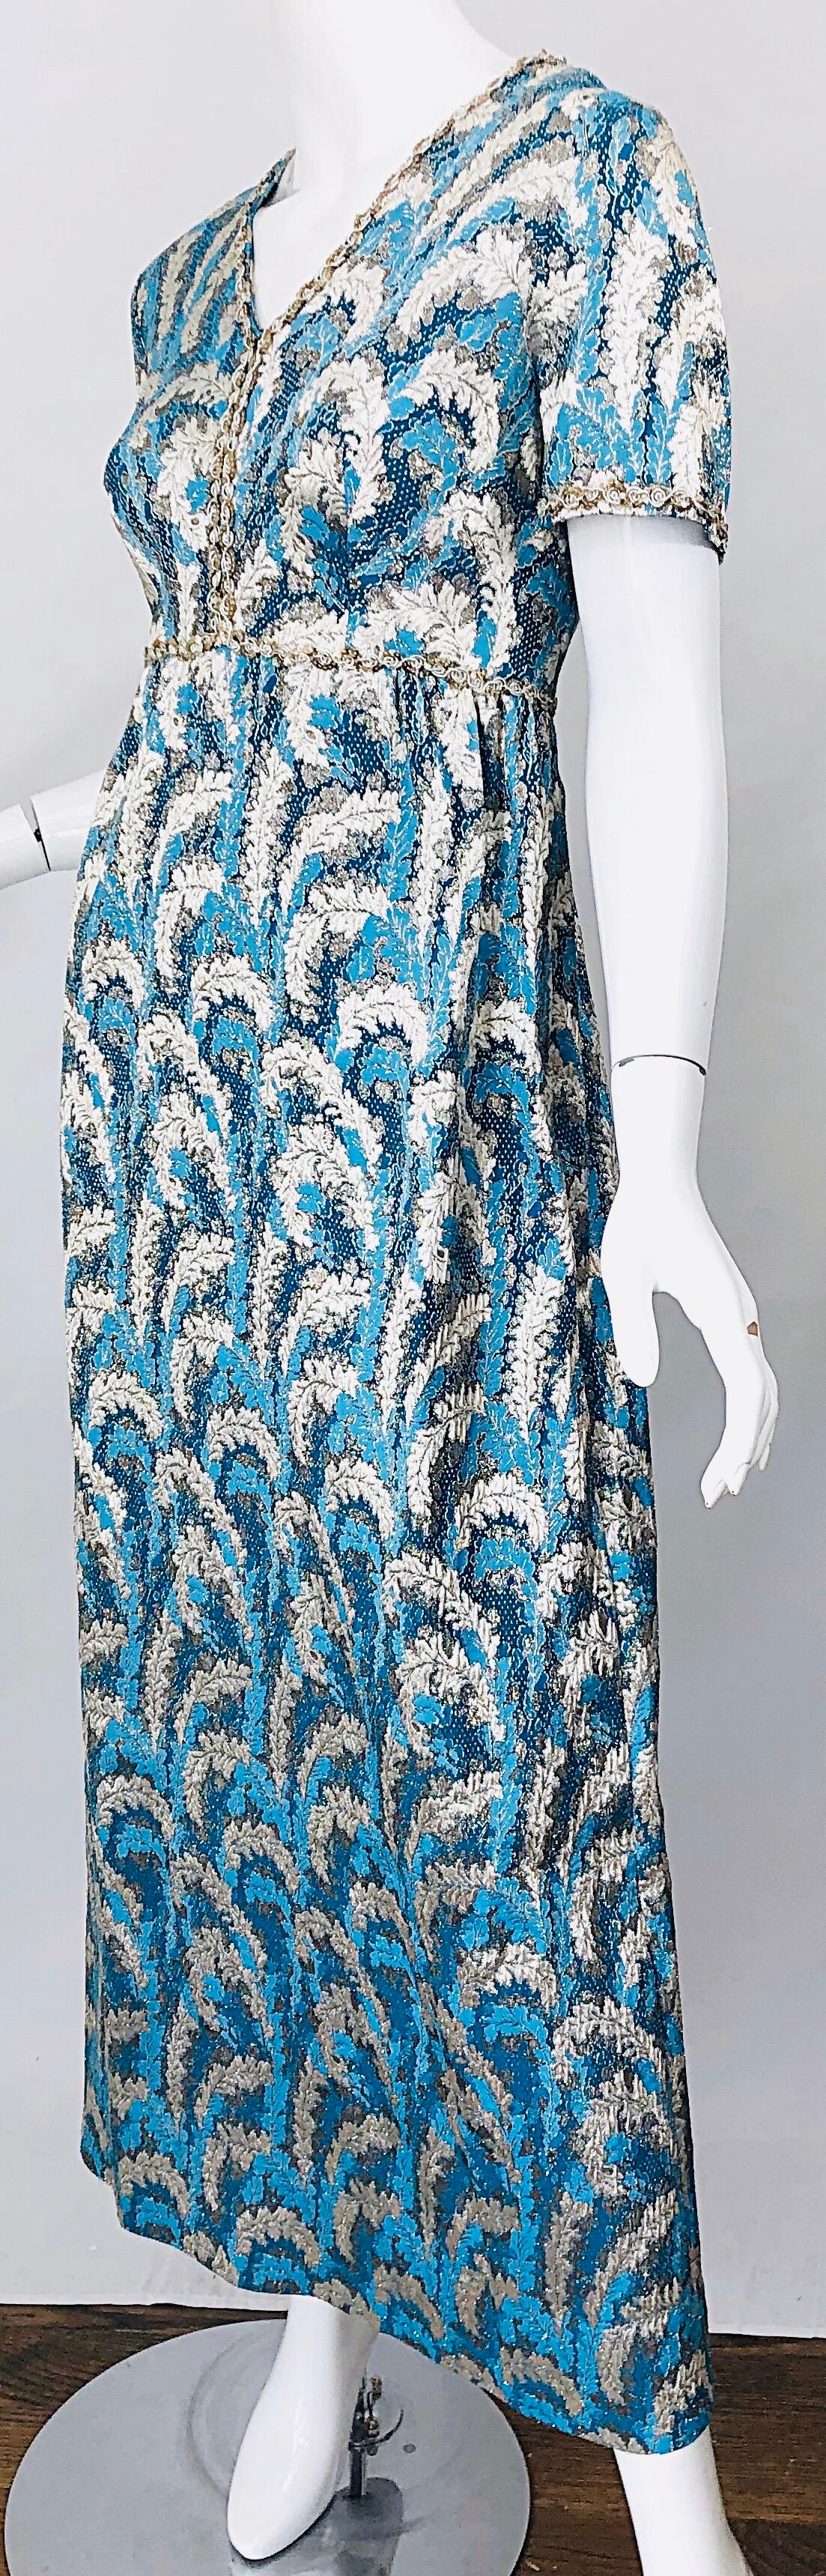 1960s Oscar de la Renta Turquoise Blue Silver Silk Brocade Sequin 60s Gown Dress For Sale 3